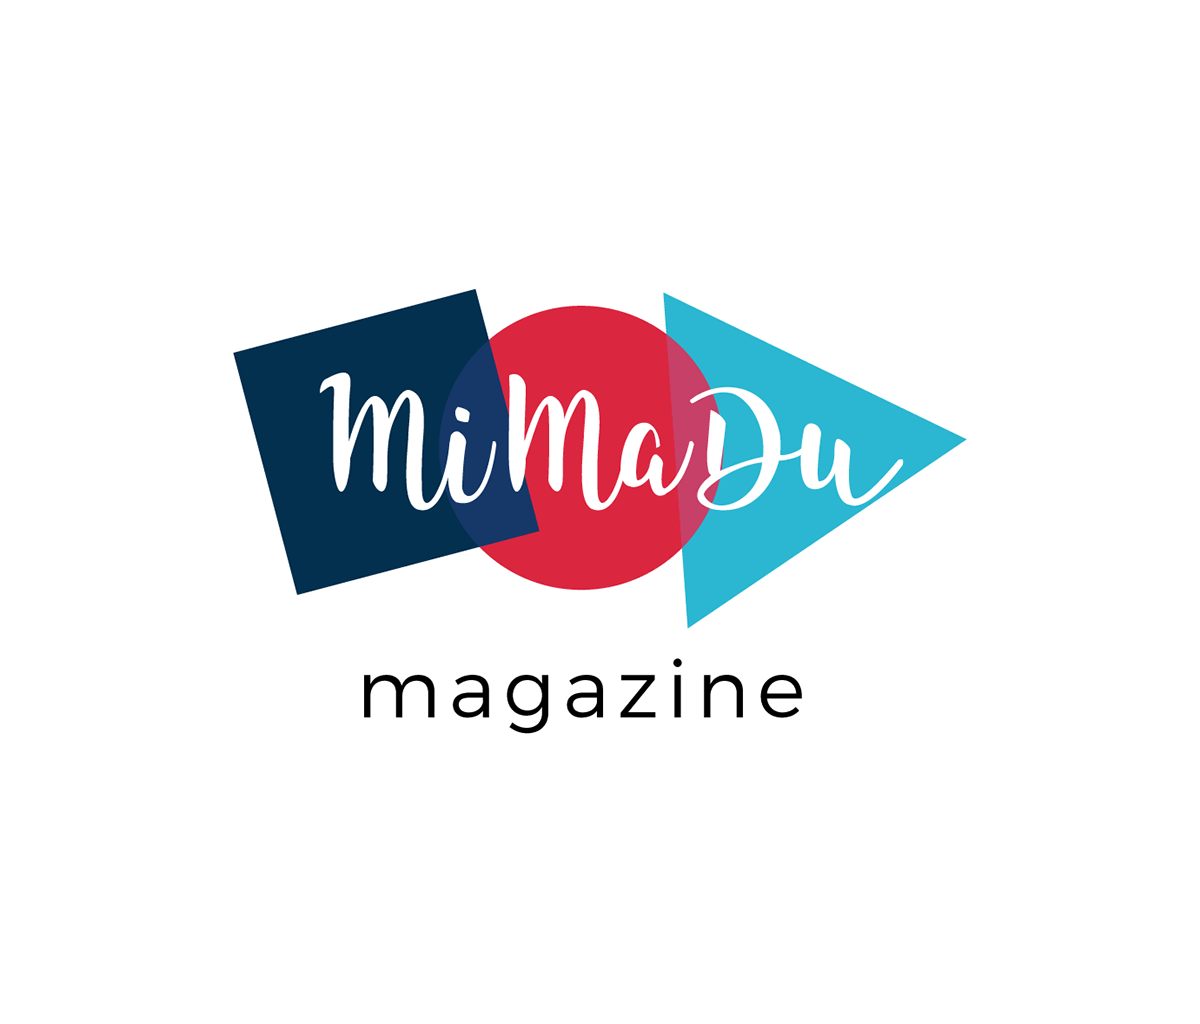 Canvas Magazine Logo - MiMaDu Magazine Design on Pantone Canvas Gallery